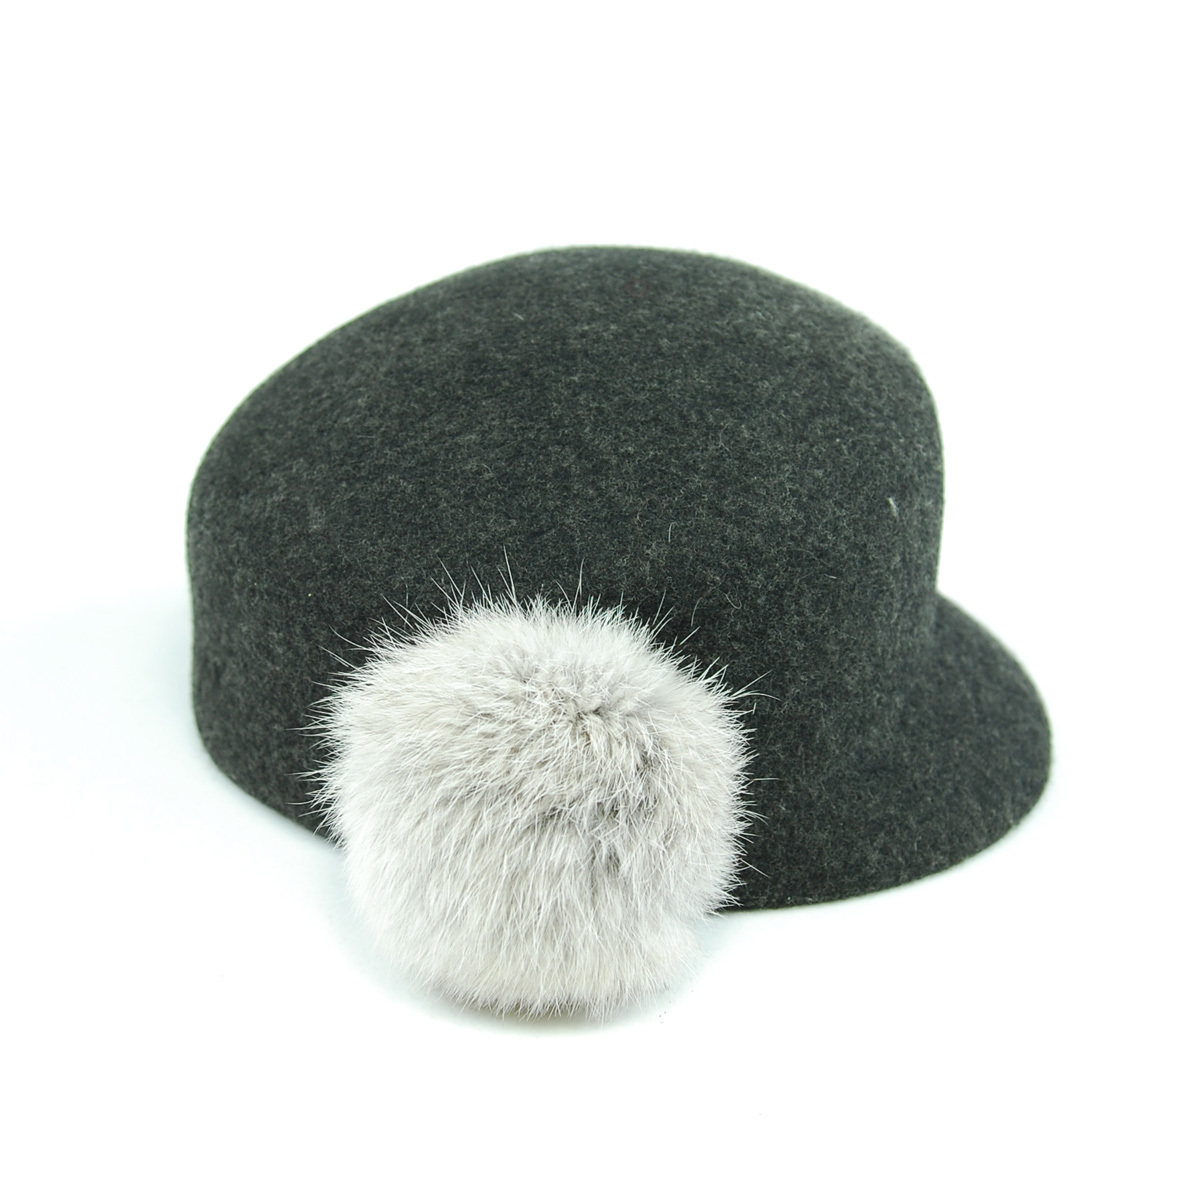 Captale pure woolen big rabbit fur ball vintage newsboy cap knight cap hat female winter